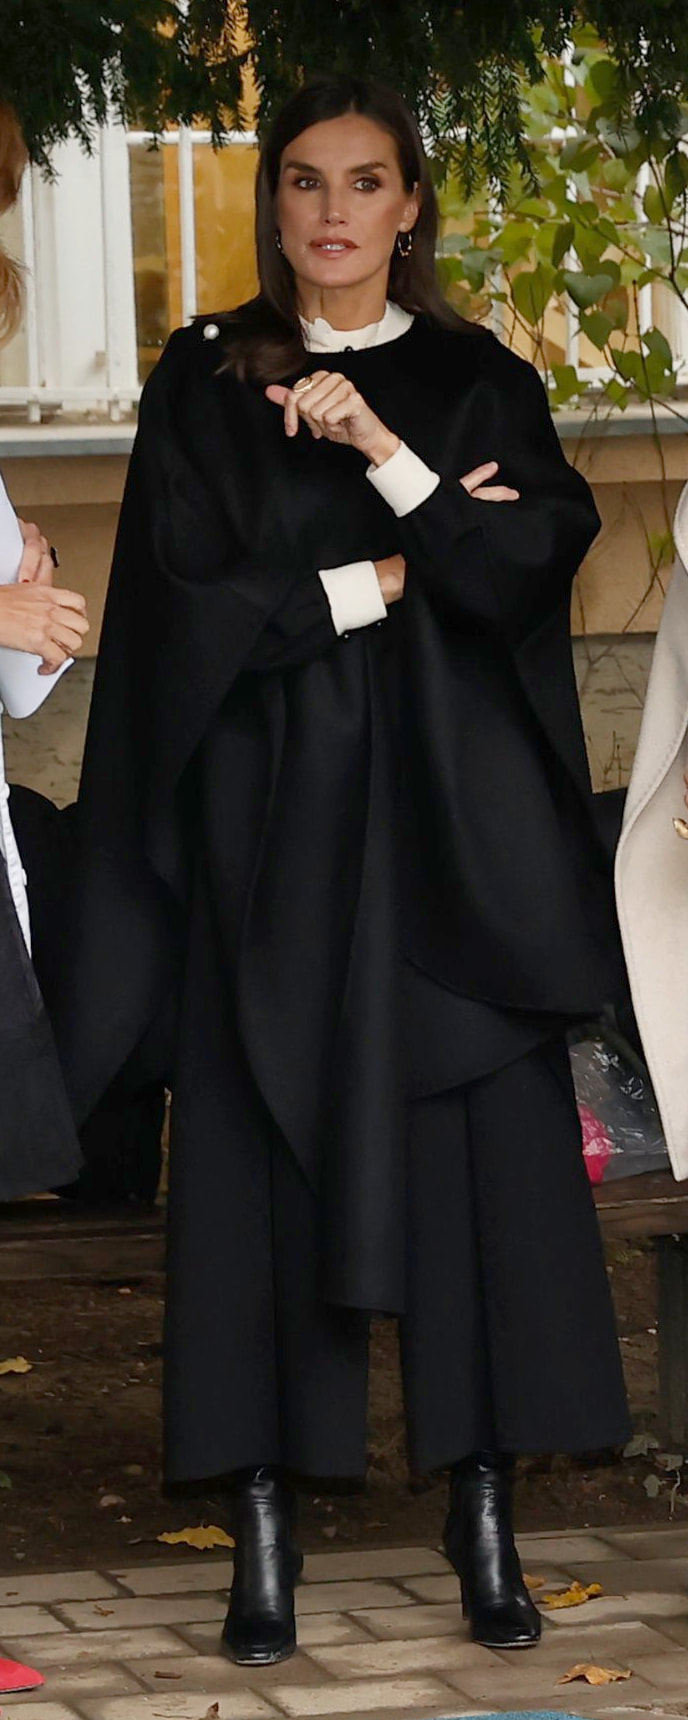 Carolina Herrera Double-Faced Wool Oversized Cape in Black​ as seen on Queen Letizia.